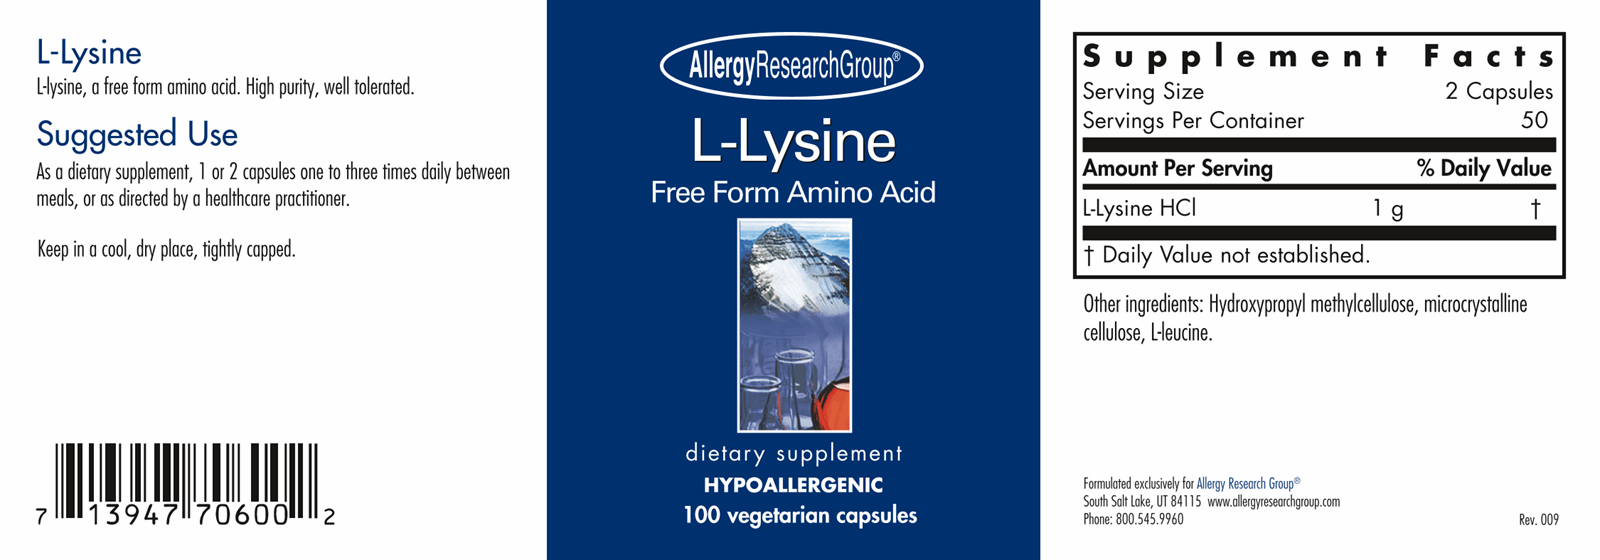 L-Lysine 500 mg 